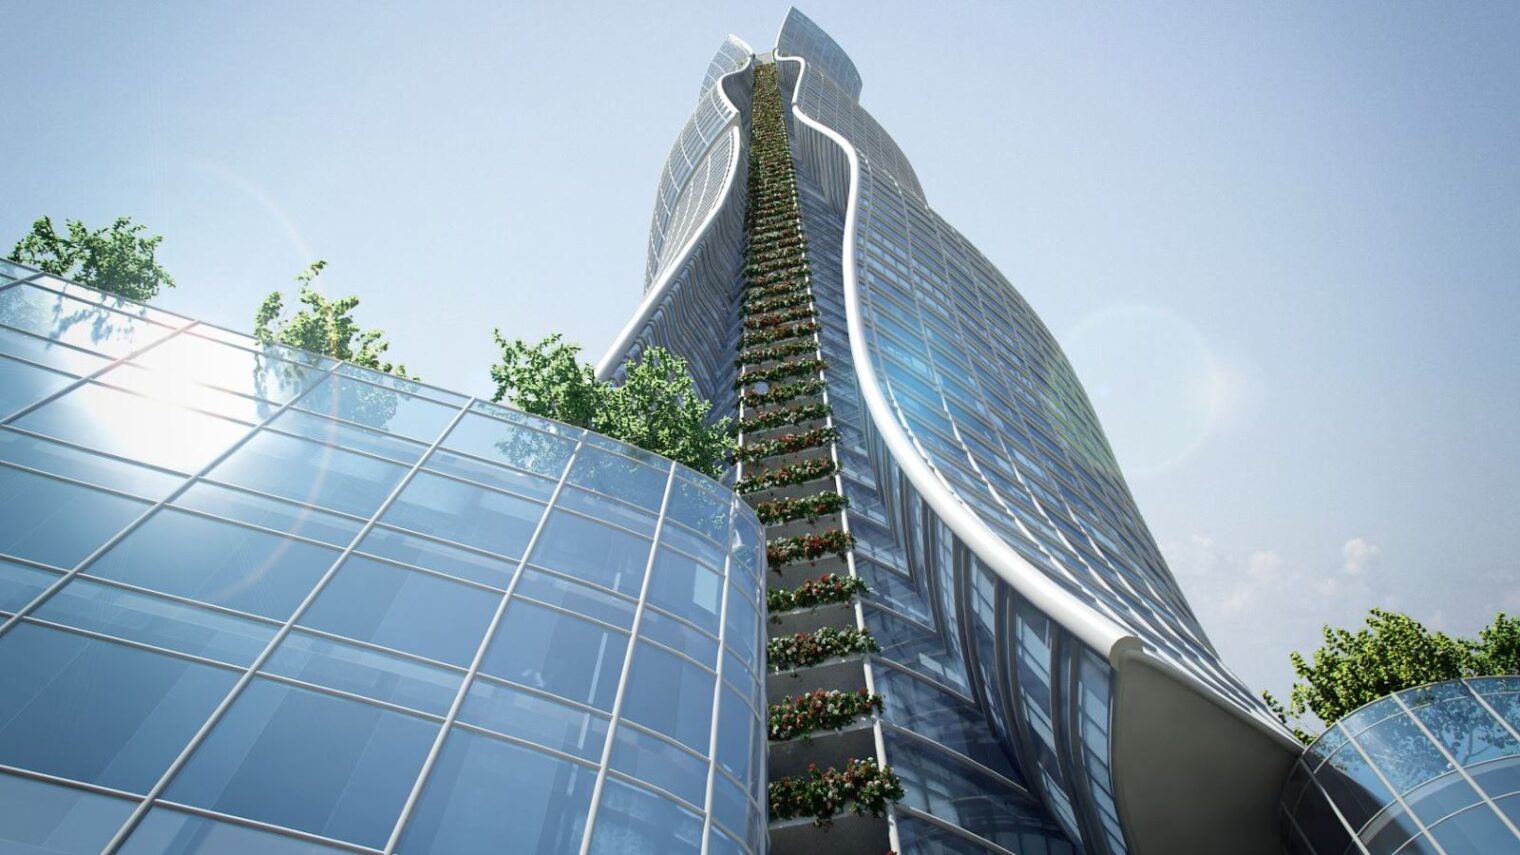 Architect’s rendering of Intercity Tower, a 100-story skyscraper under construction straddling Tel Aviv and Ramat Gan. Photo courtesy of Miloslavsky Architects